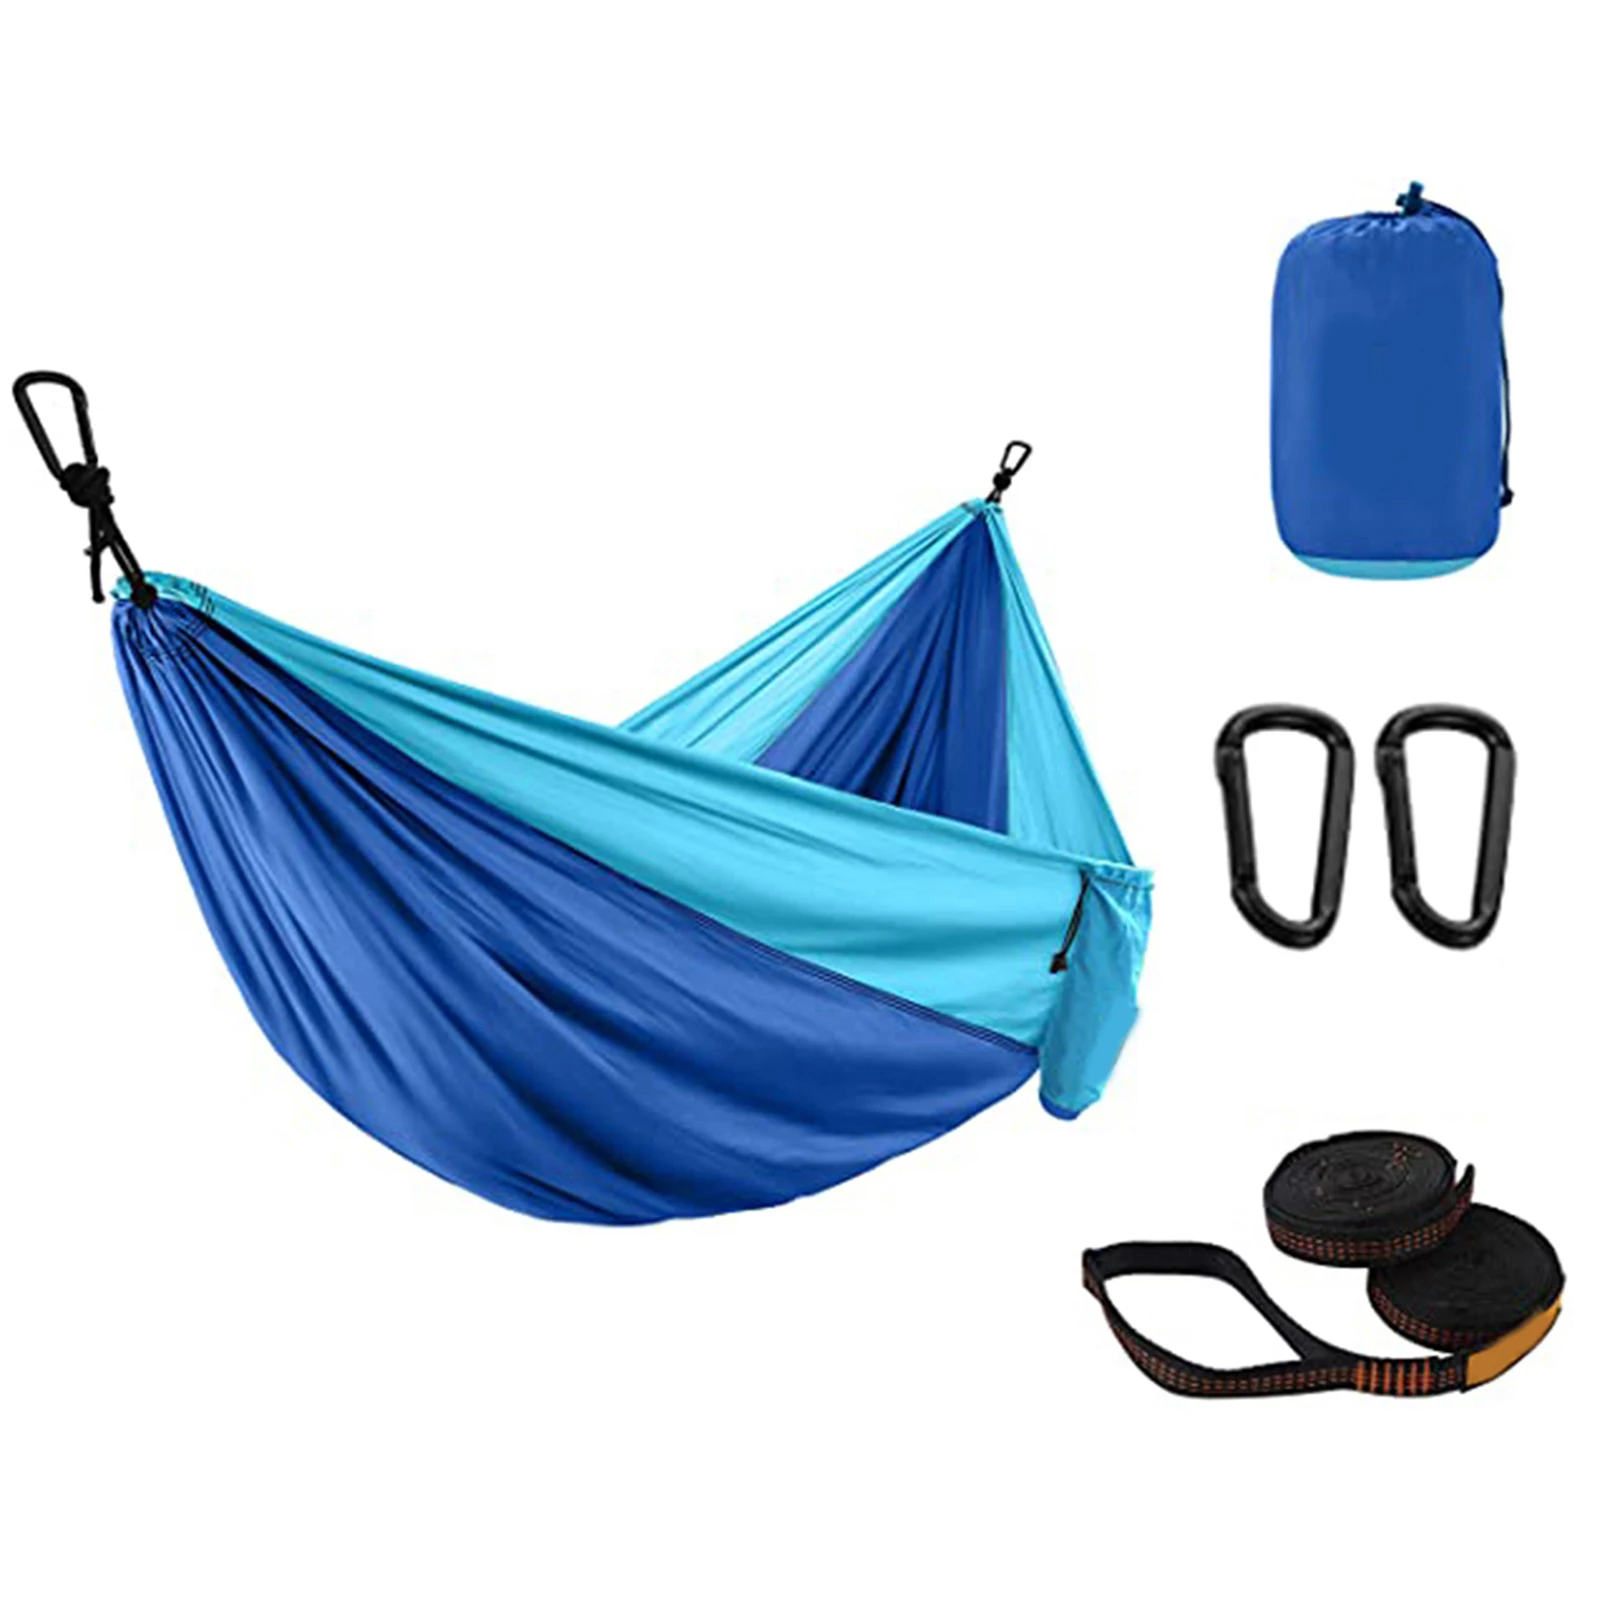 

Outdoor Camping Hammock Soft Nylon Fabric Safe Sturdy Blue Hammock for Fishing Lawn Garden